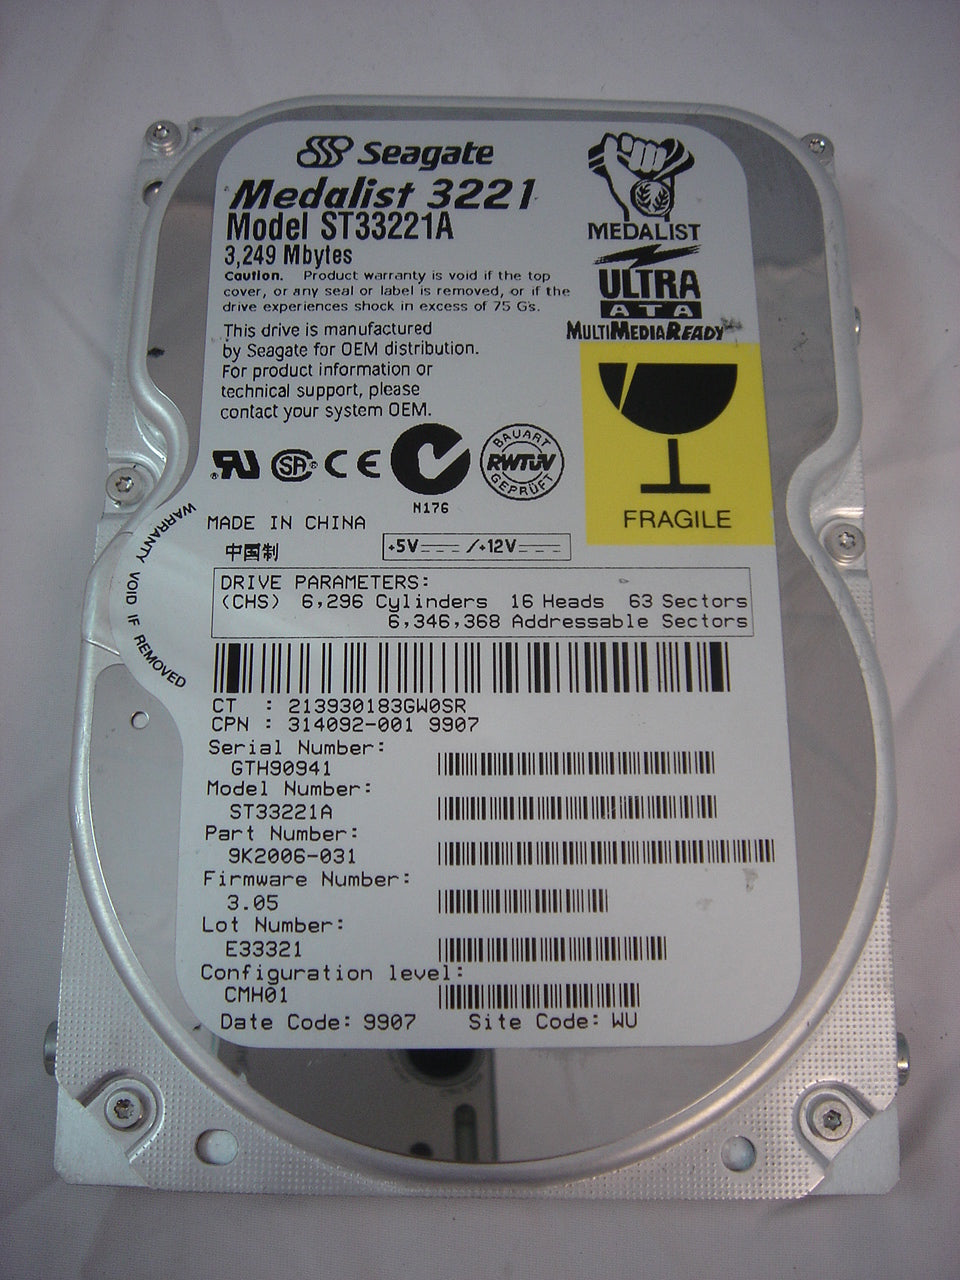 PR04276_9K2006-031_HP/Seagate Medalist 3.2GB 3.5"  IDE HDD - Image2